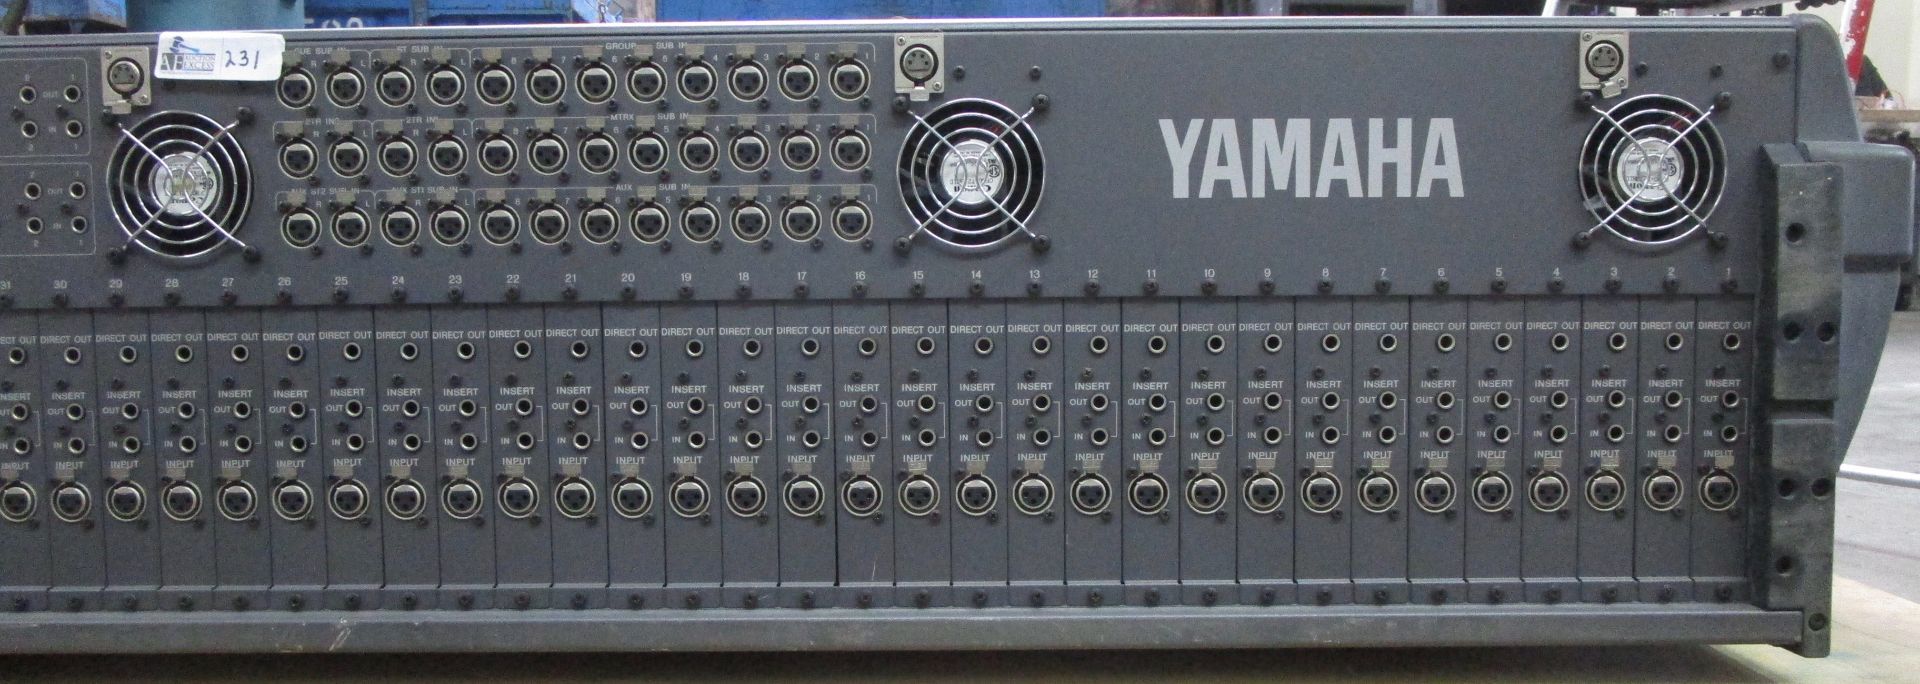 YAMAHA PM4000 SOUNDBOARD WITH PW4000 POWER SUPPLY - Image 6 of 7